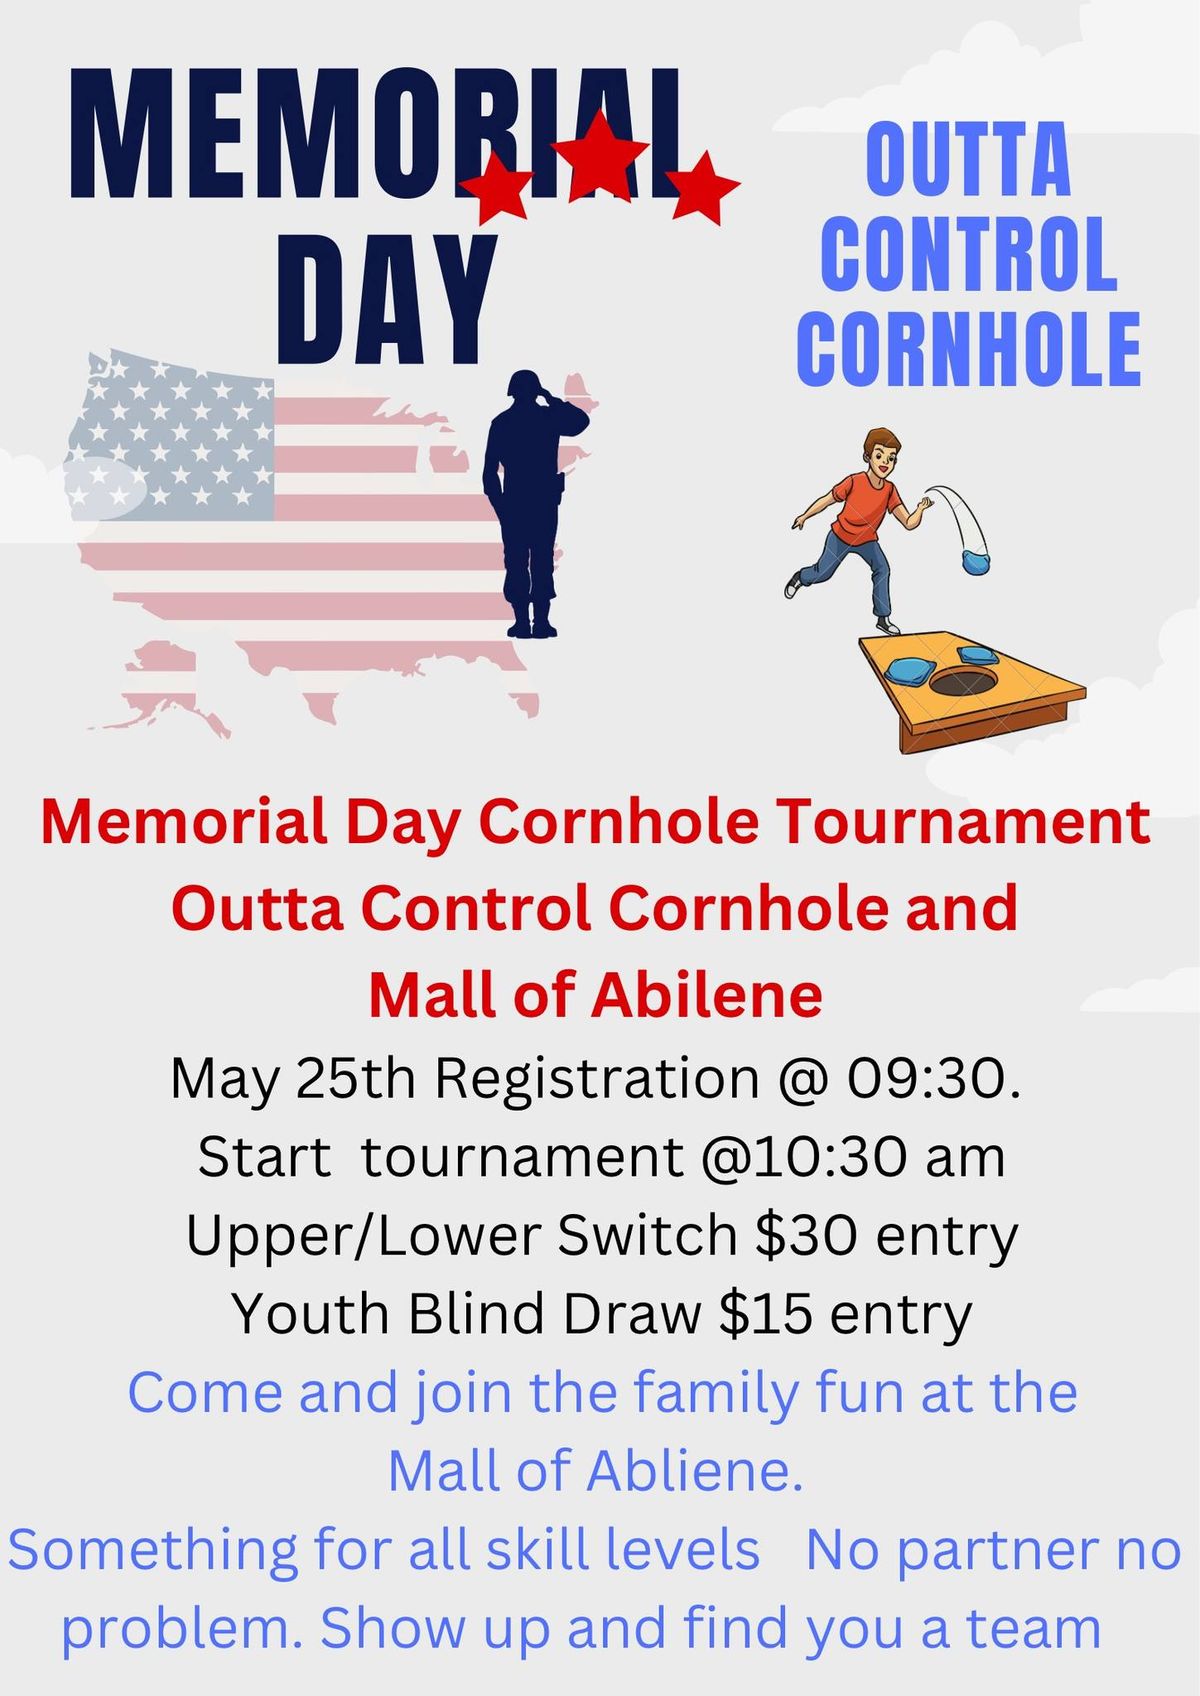 Memorial Day Cornhole Tournament